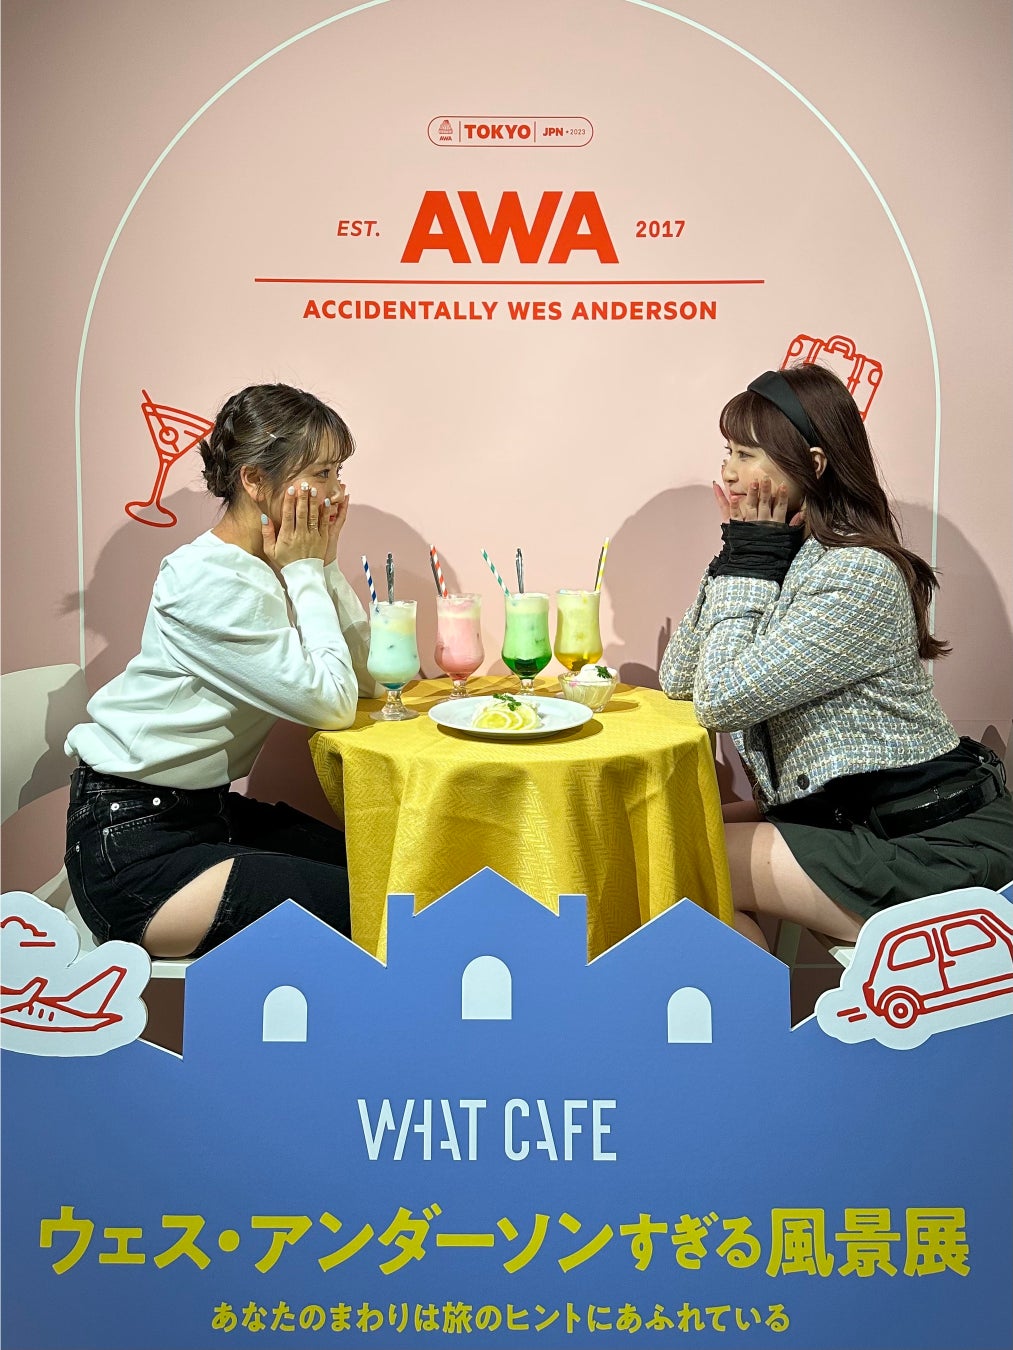 SNS映え必至のカラフル×可愛い特別メニュー登場！　AWA展とアートスポット「WHAT CAFE」コラボ　「ウェス・アンダーソンすぎる風景展」5月26日まで開催